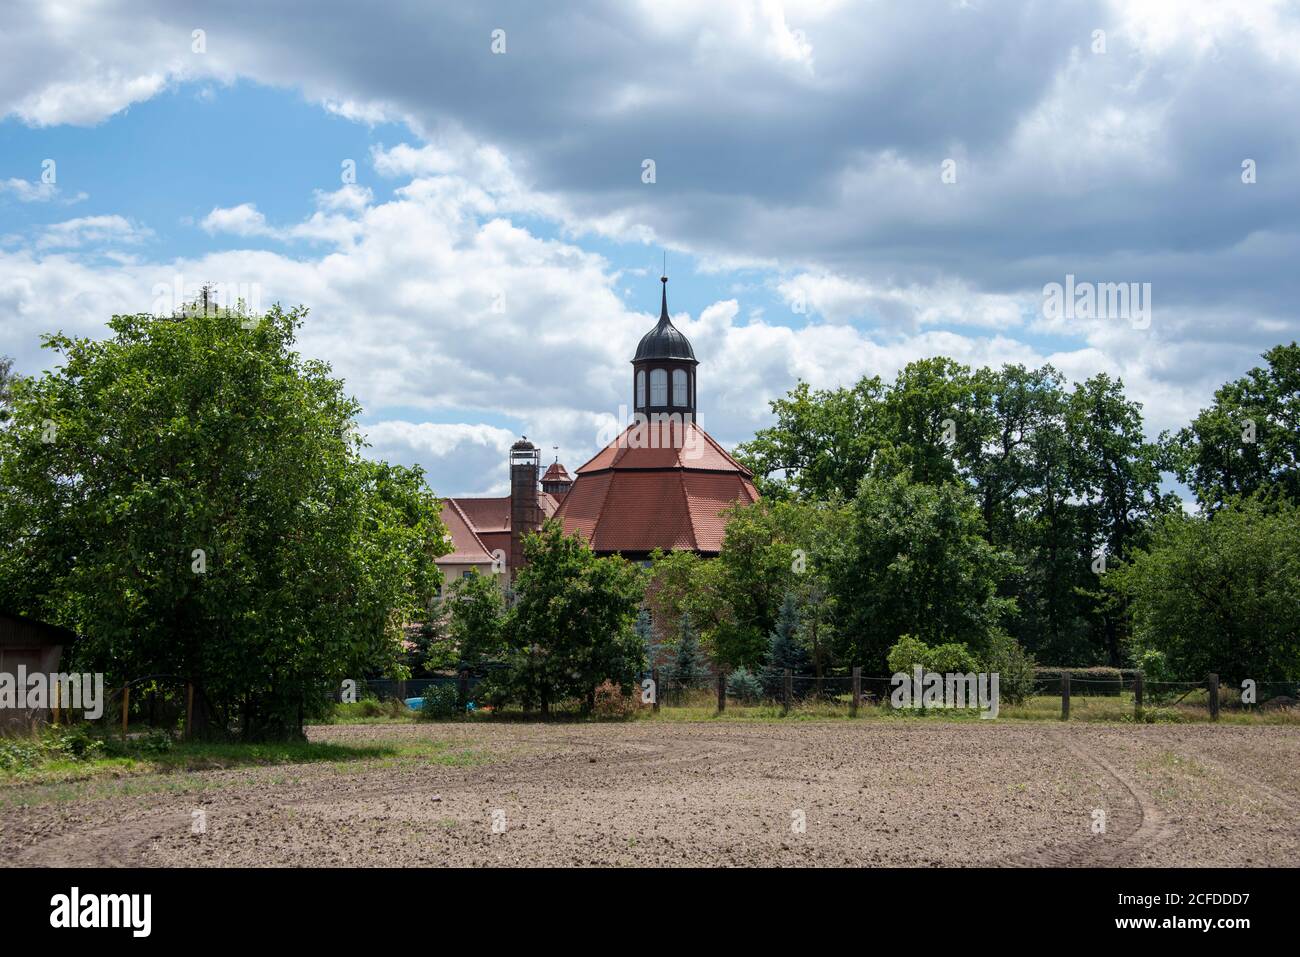 Germany, Saxony-Anhalt, Oranienbaum, baroque castle, belongs to the Wörlitz Garden Realm, Unesco World Heritage. Stock Photo